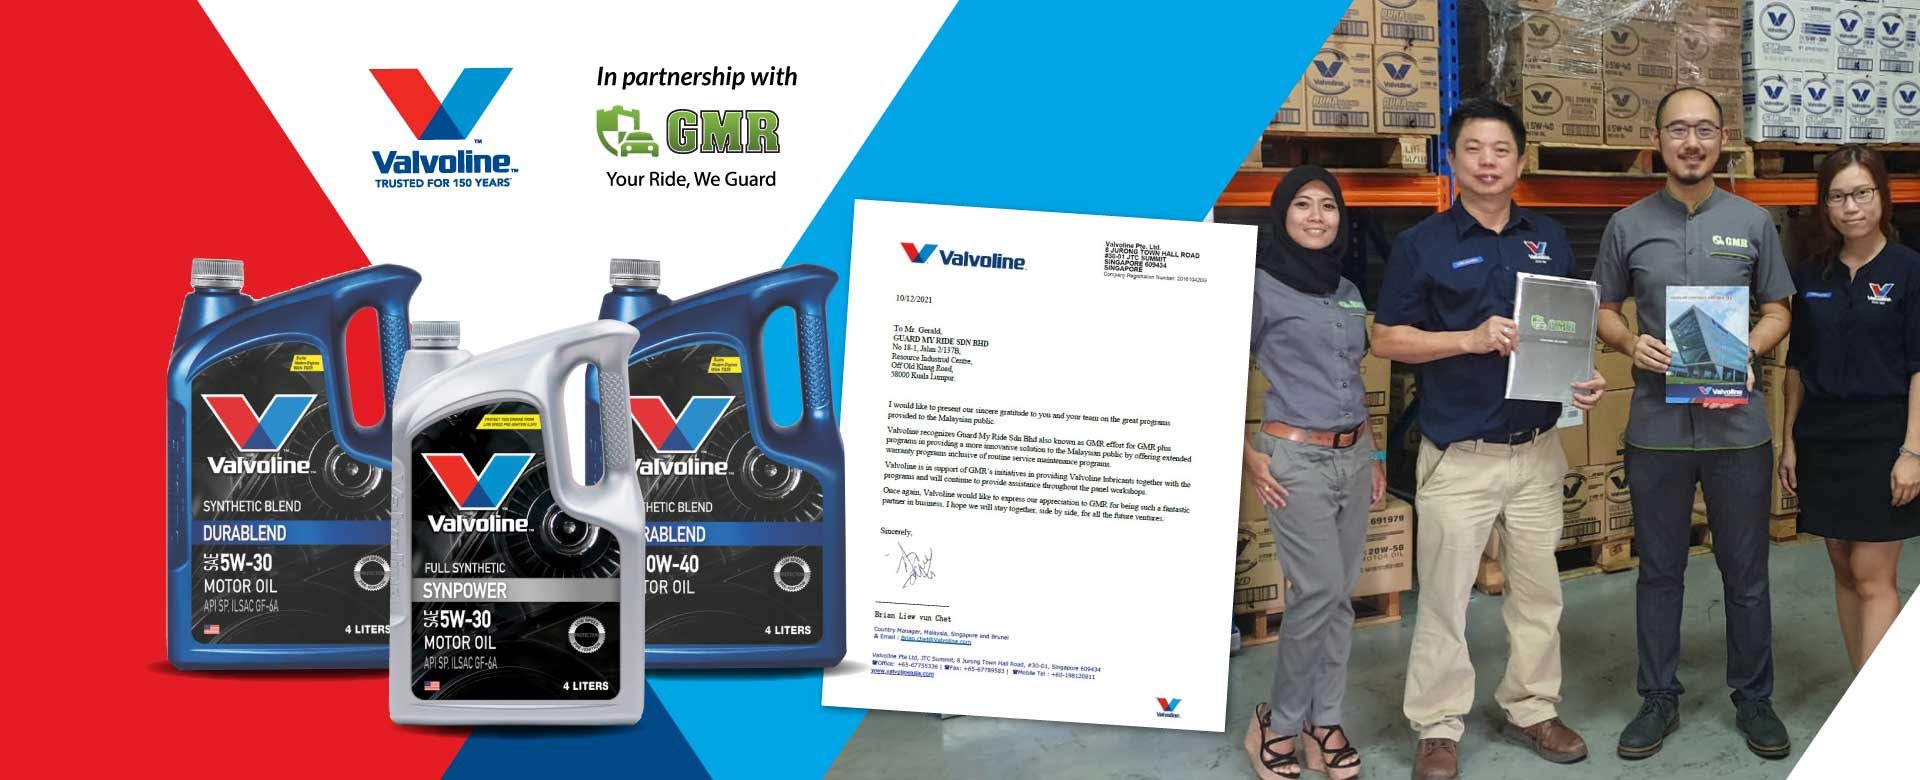 Valvoline Partnership with GMR